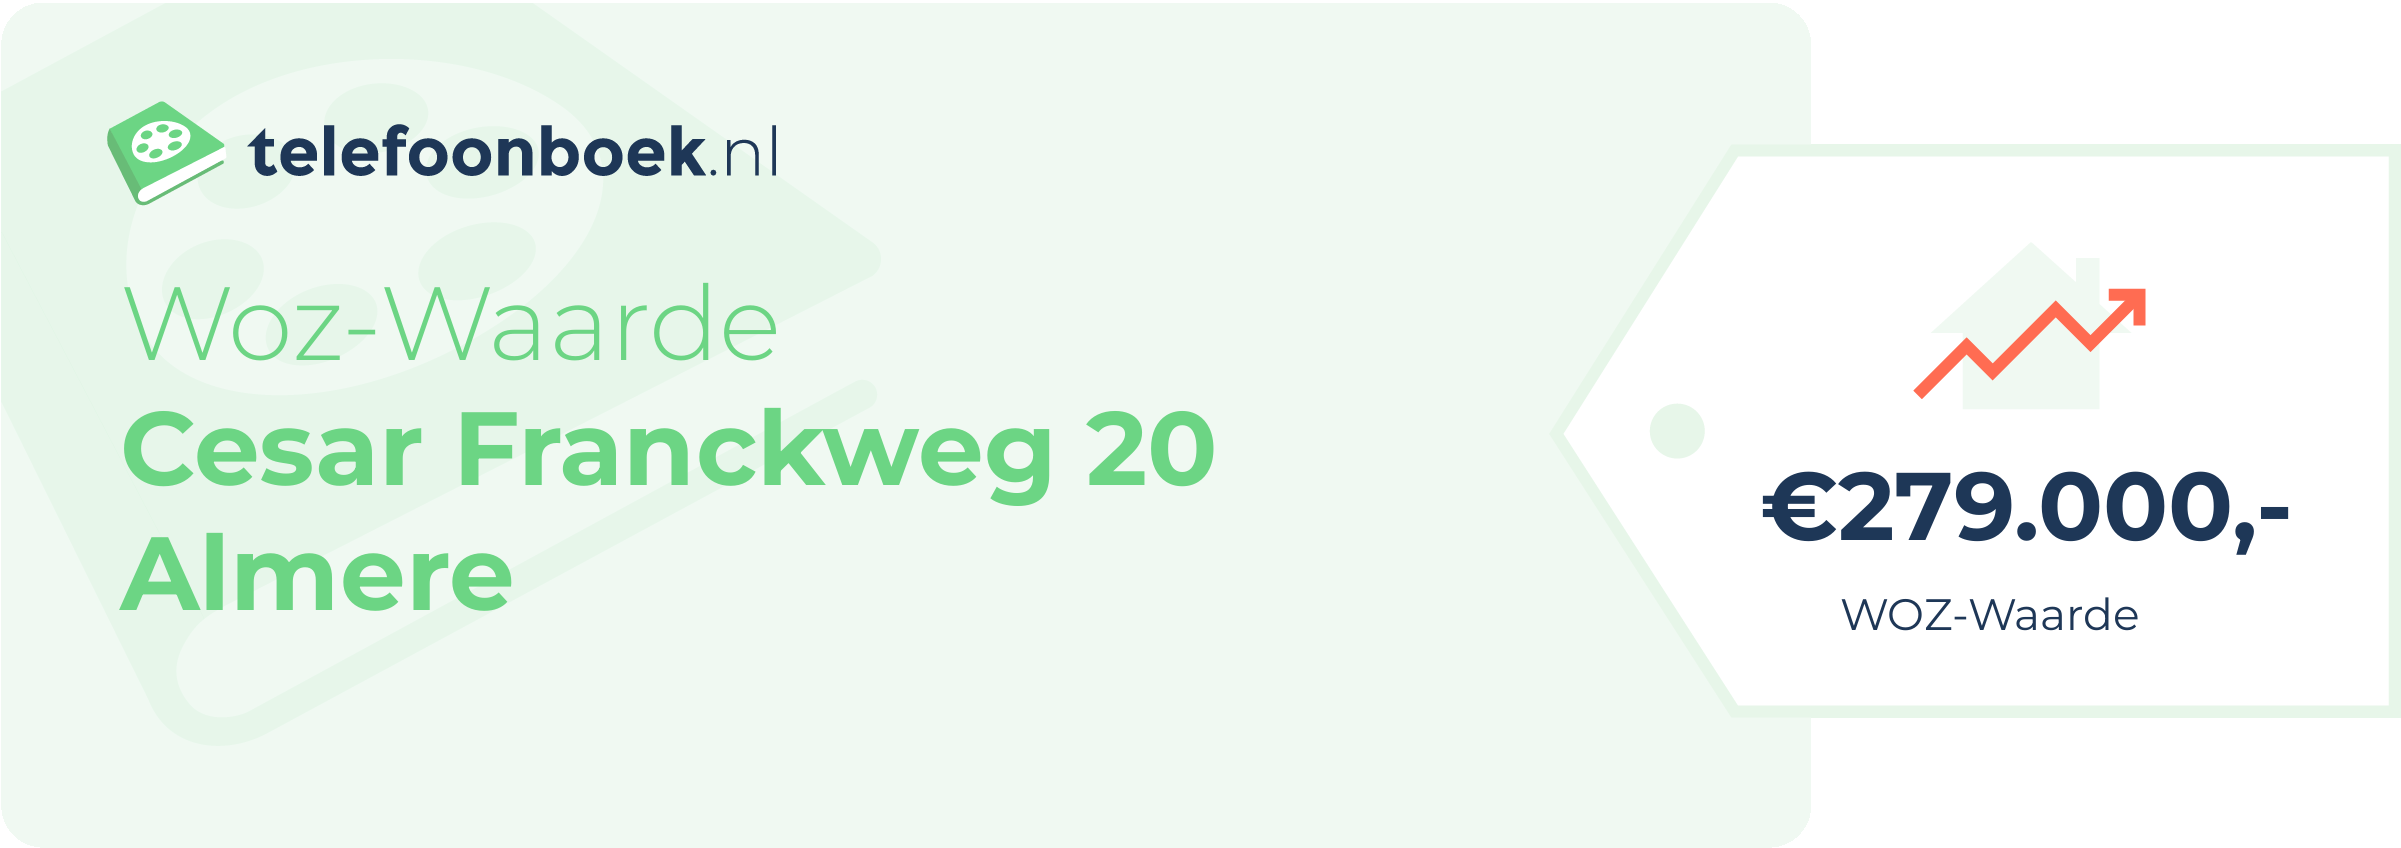 WOZ-waarde Cesar Franckweg 20 Almere